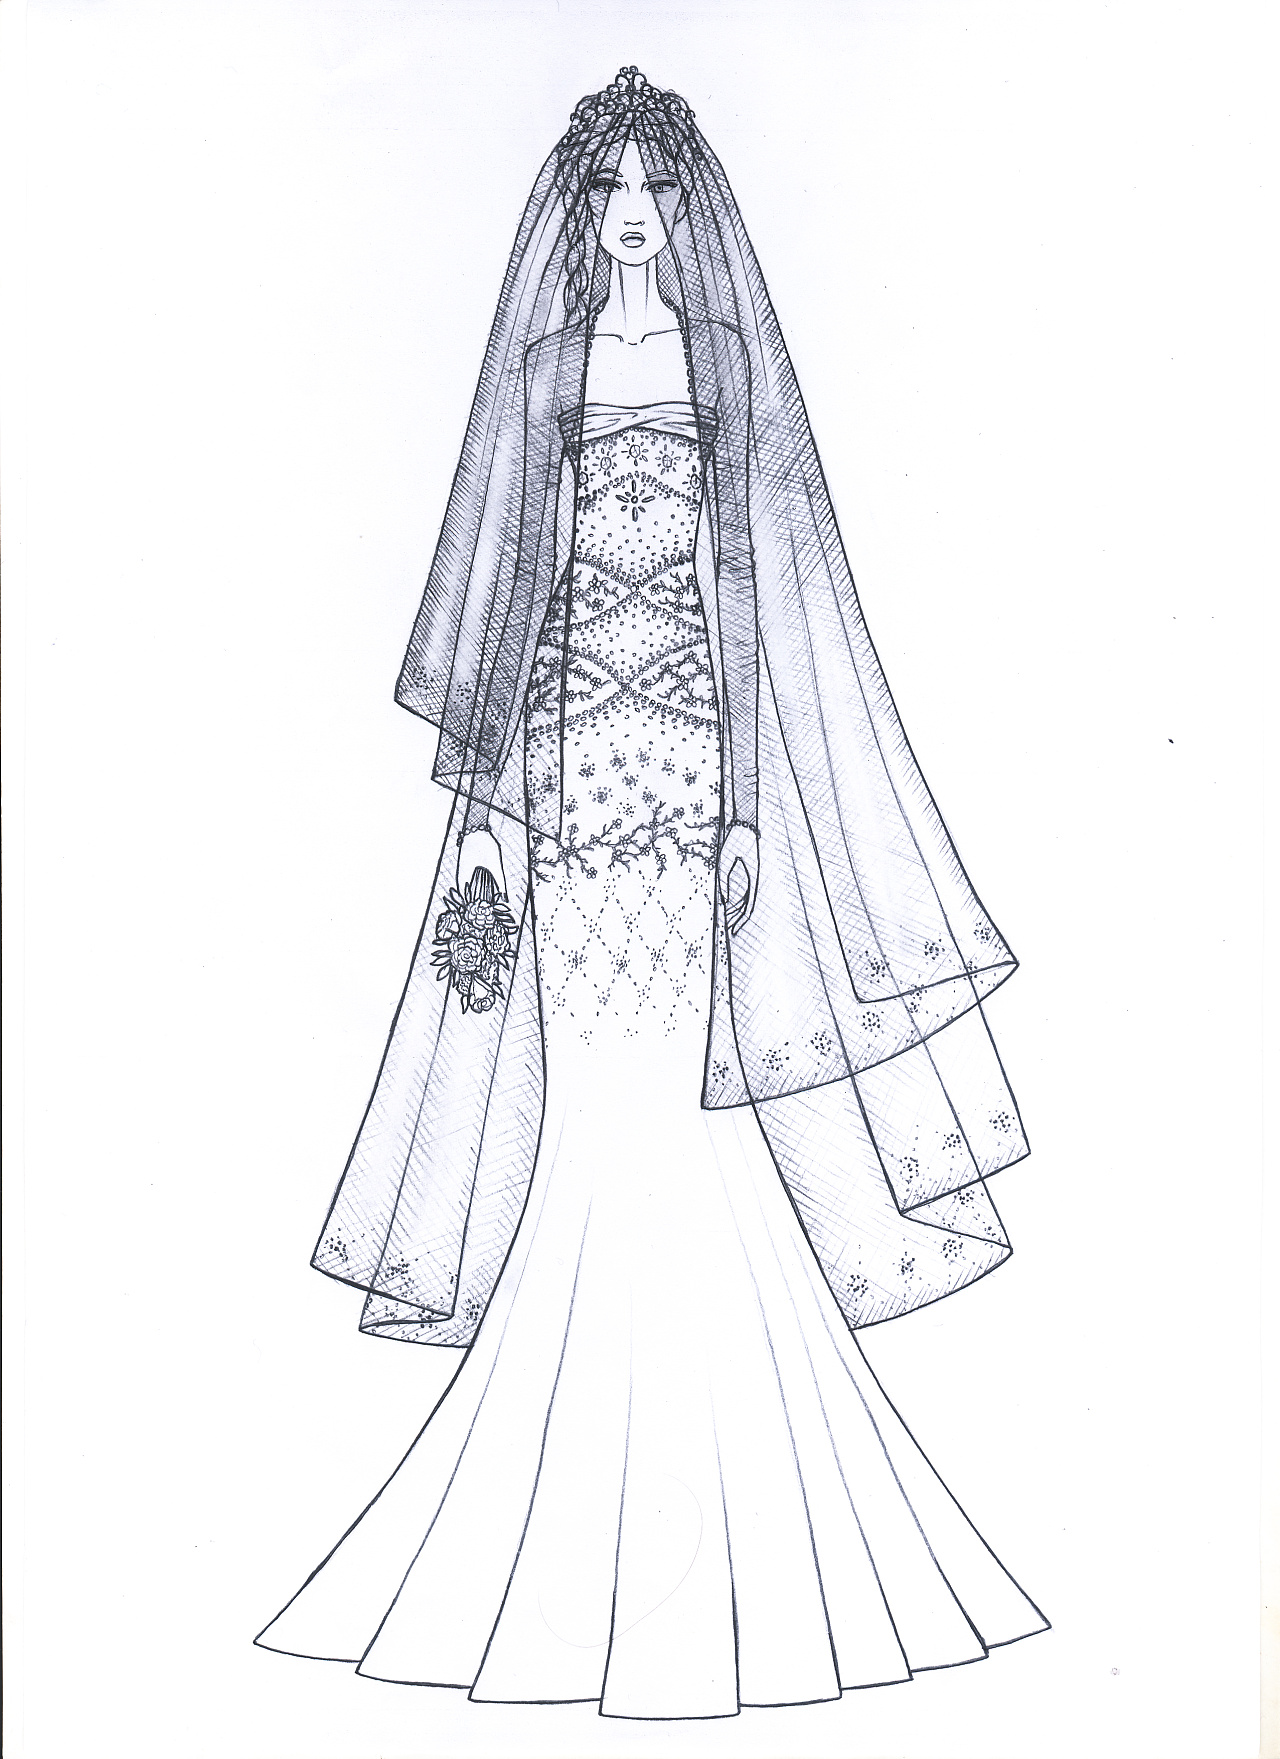 ShiniUni 婚纱作品 《花间夕》 - ShiniUni婚纱礼服高级定制设计 - 设计师品牌